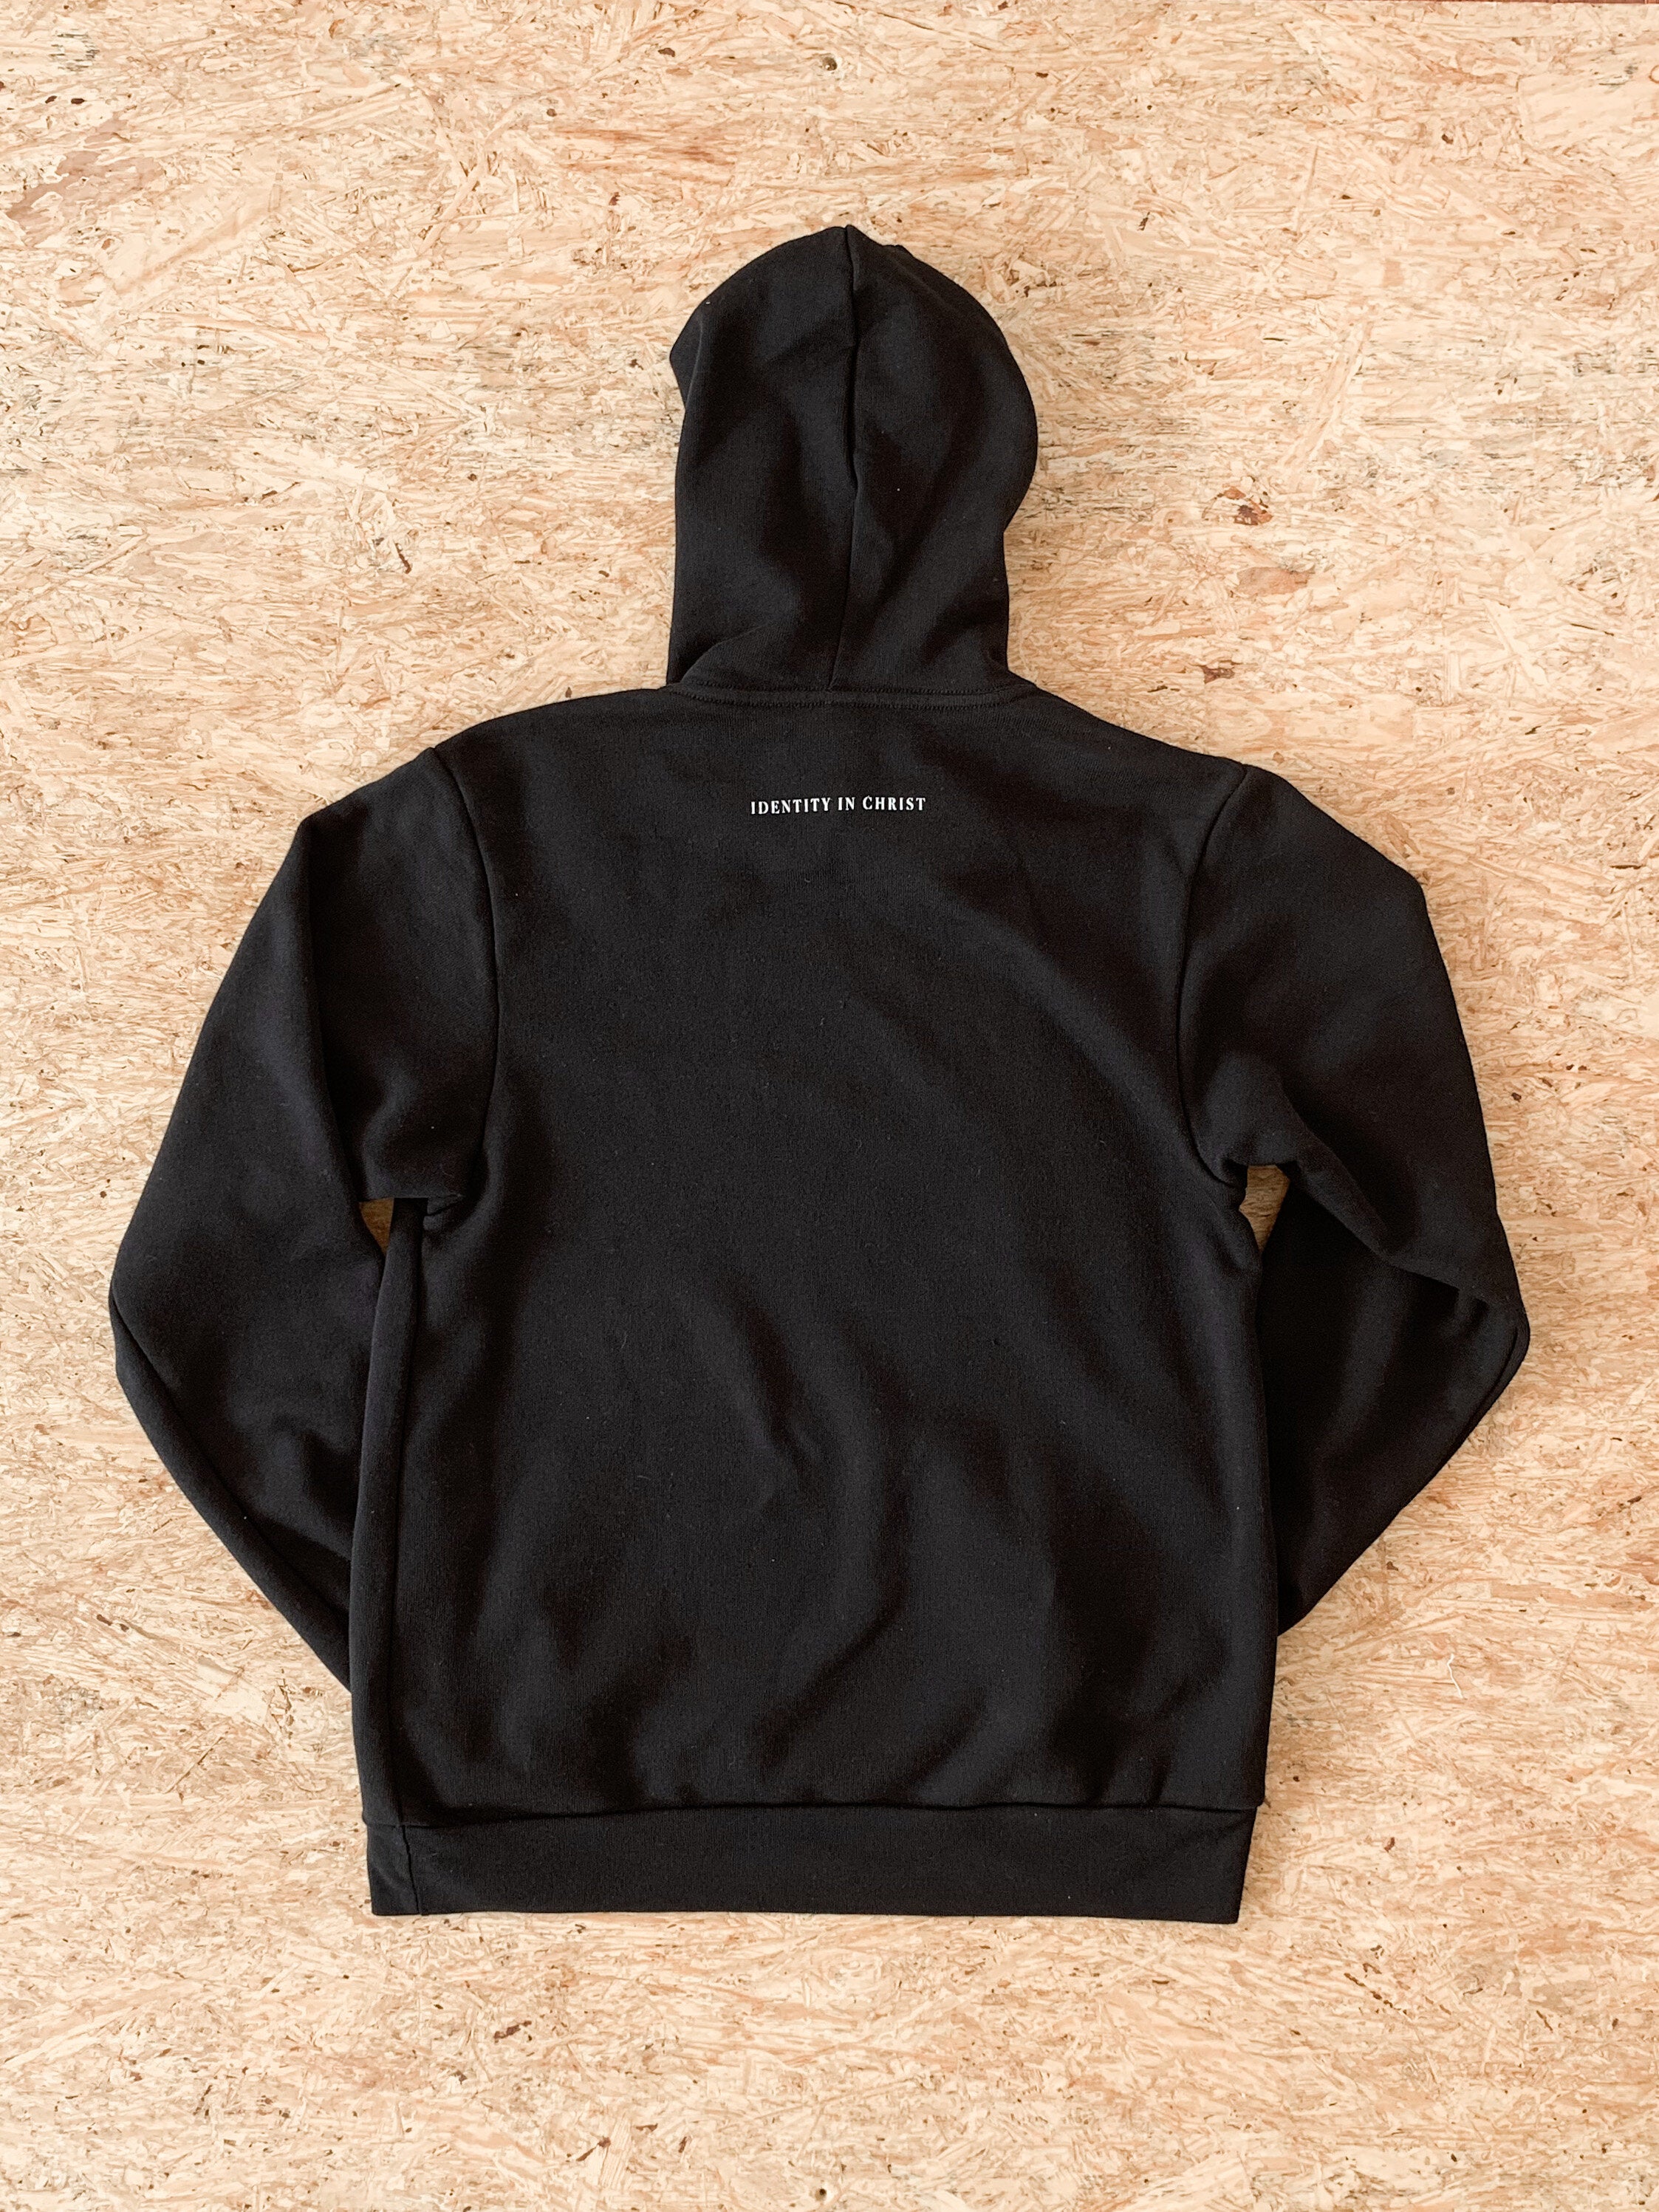 Sweatshirt Hoodie - Small Logo - Identity in Christ - Black